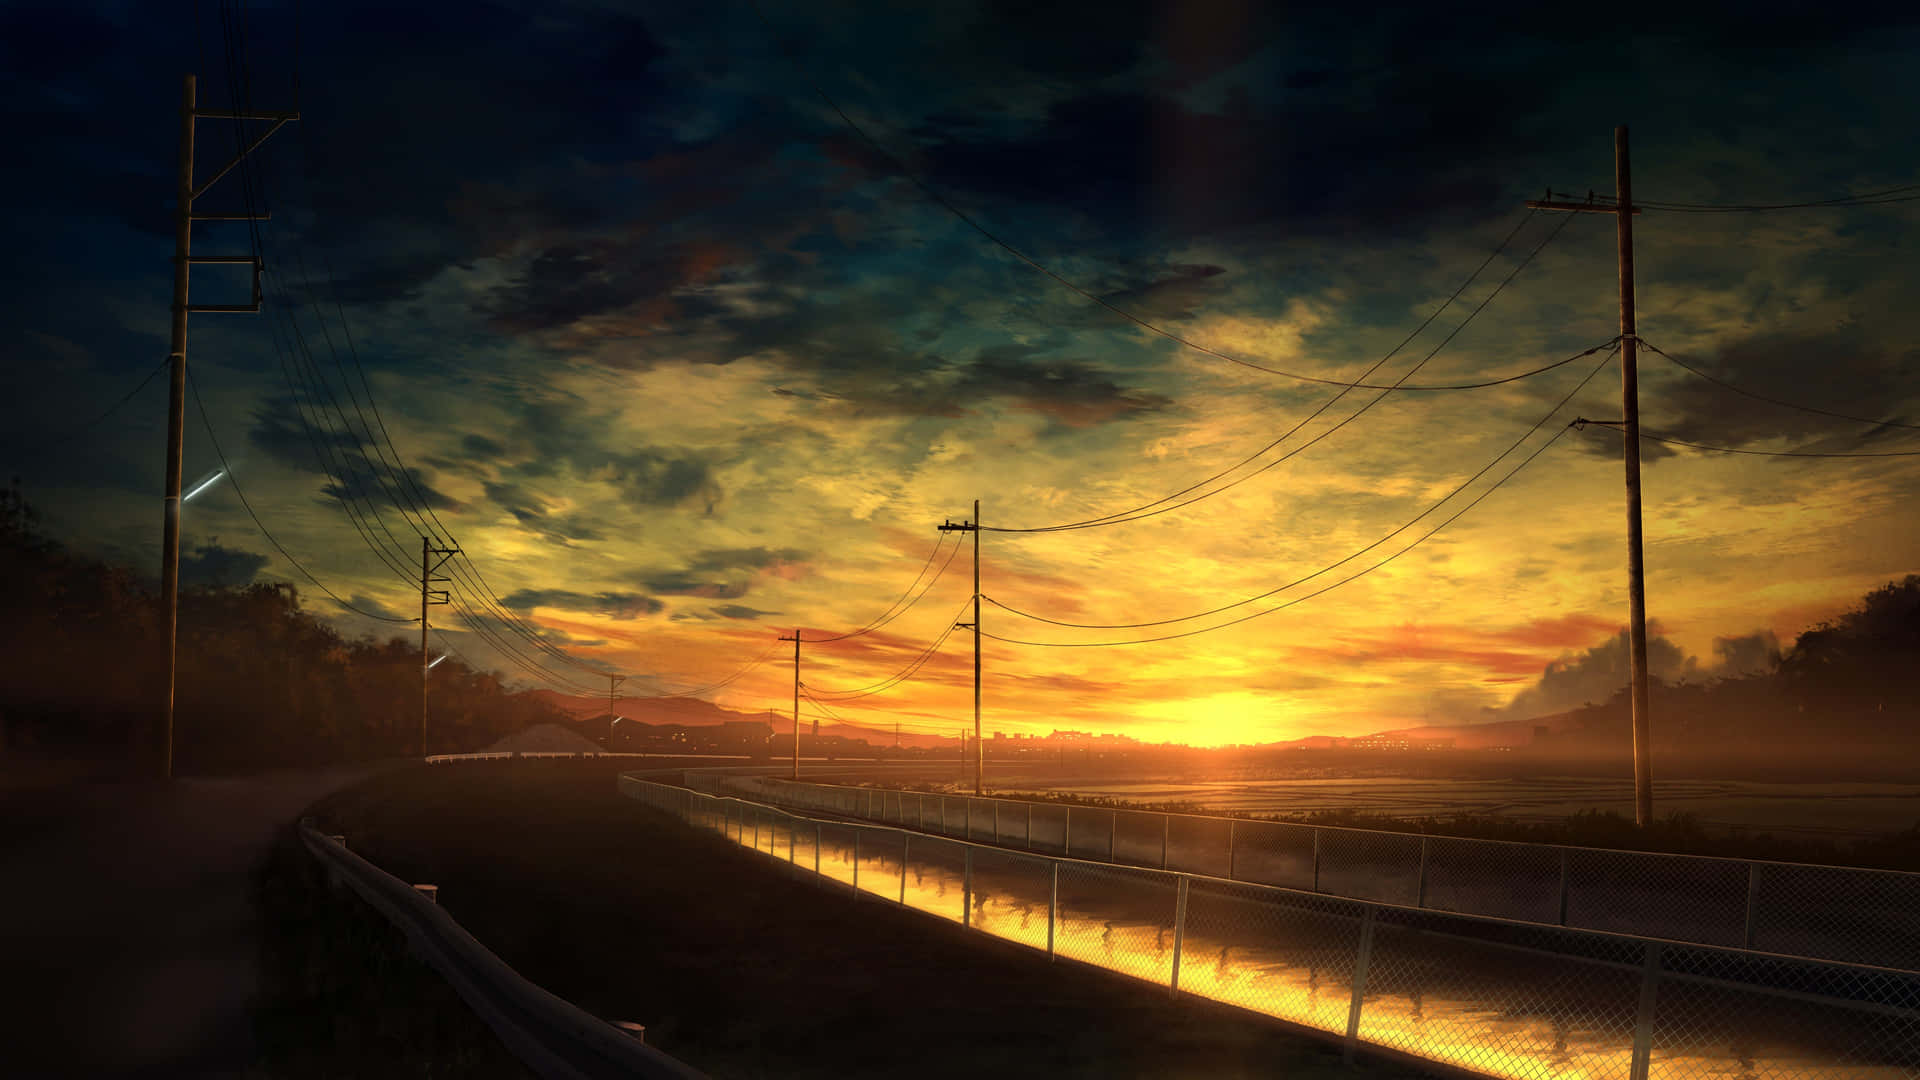 A Serene Anime Sunset